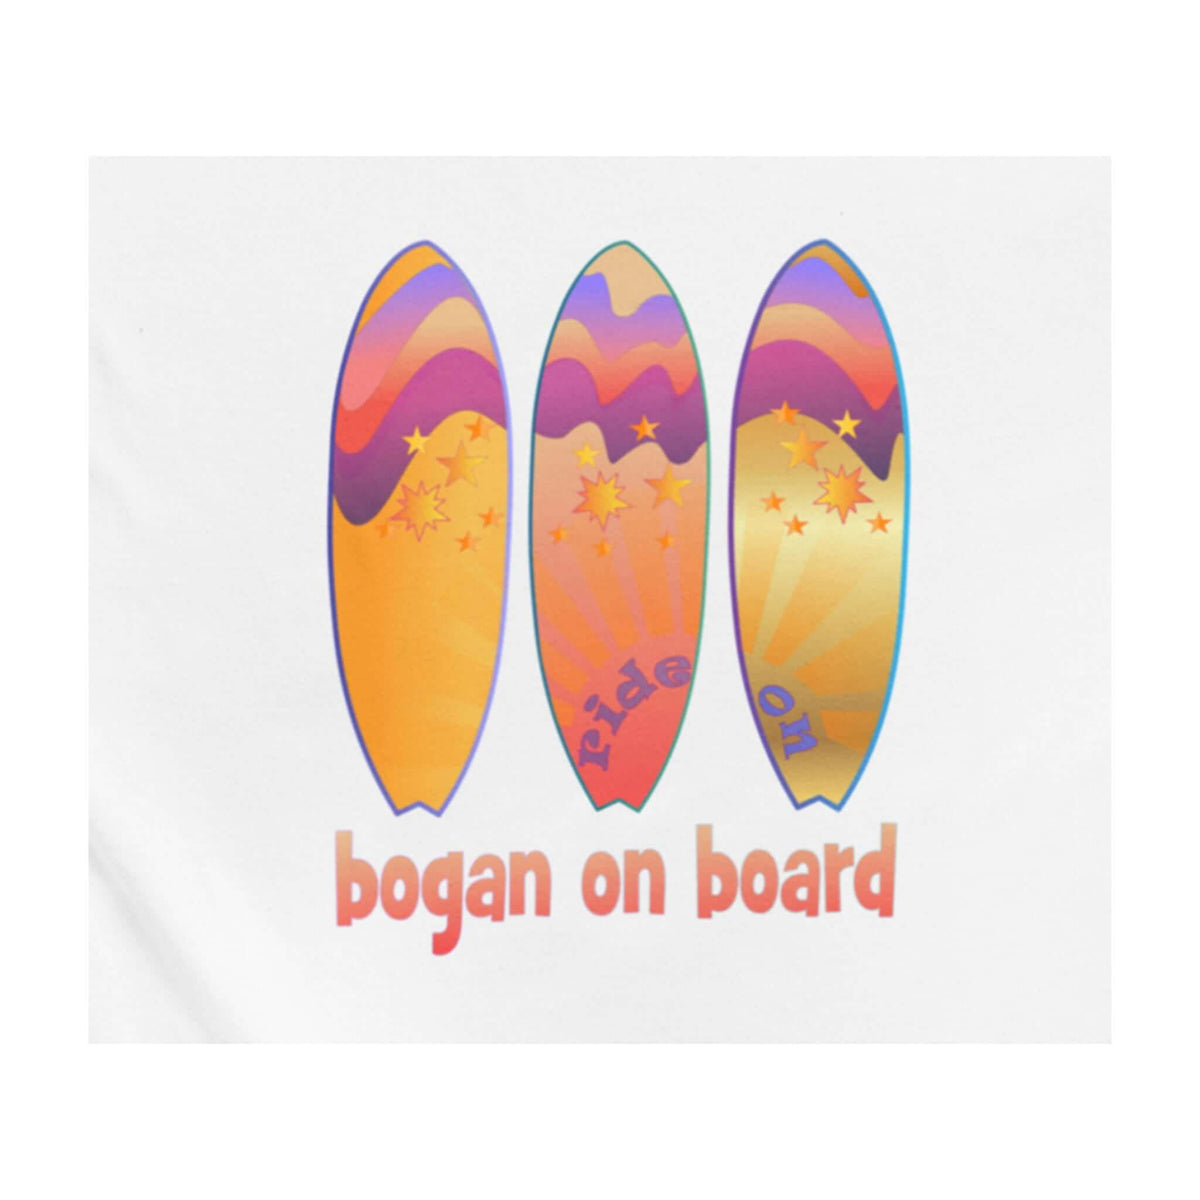 Aussie surf design depicting Bogan on Board with three surfboards